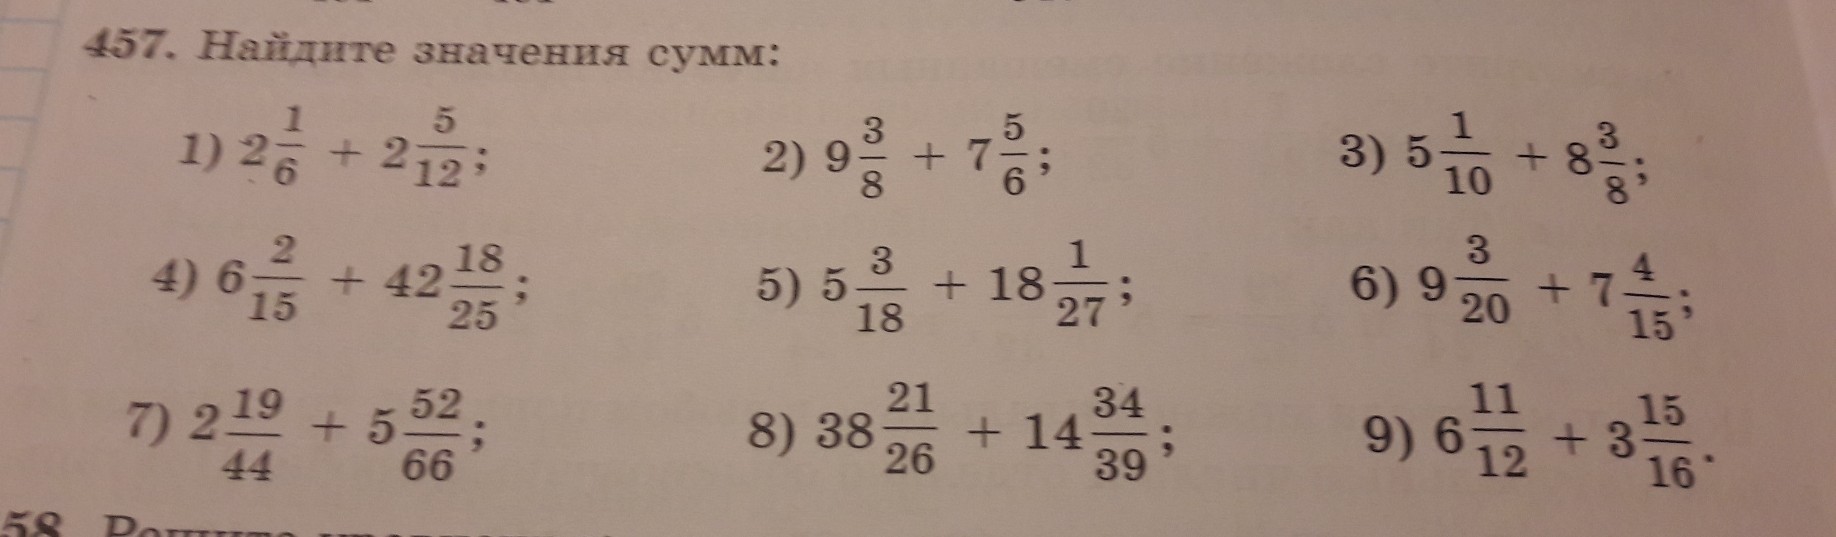 Найдите сумму 4 7 6 класс. 457 Найдите значения сумм. Найди значение суммы. Найди значения сумм 9+9+9+9. Найди значение выражения номер 457.